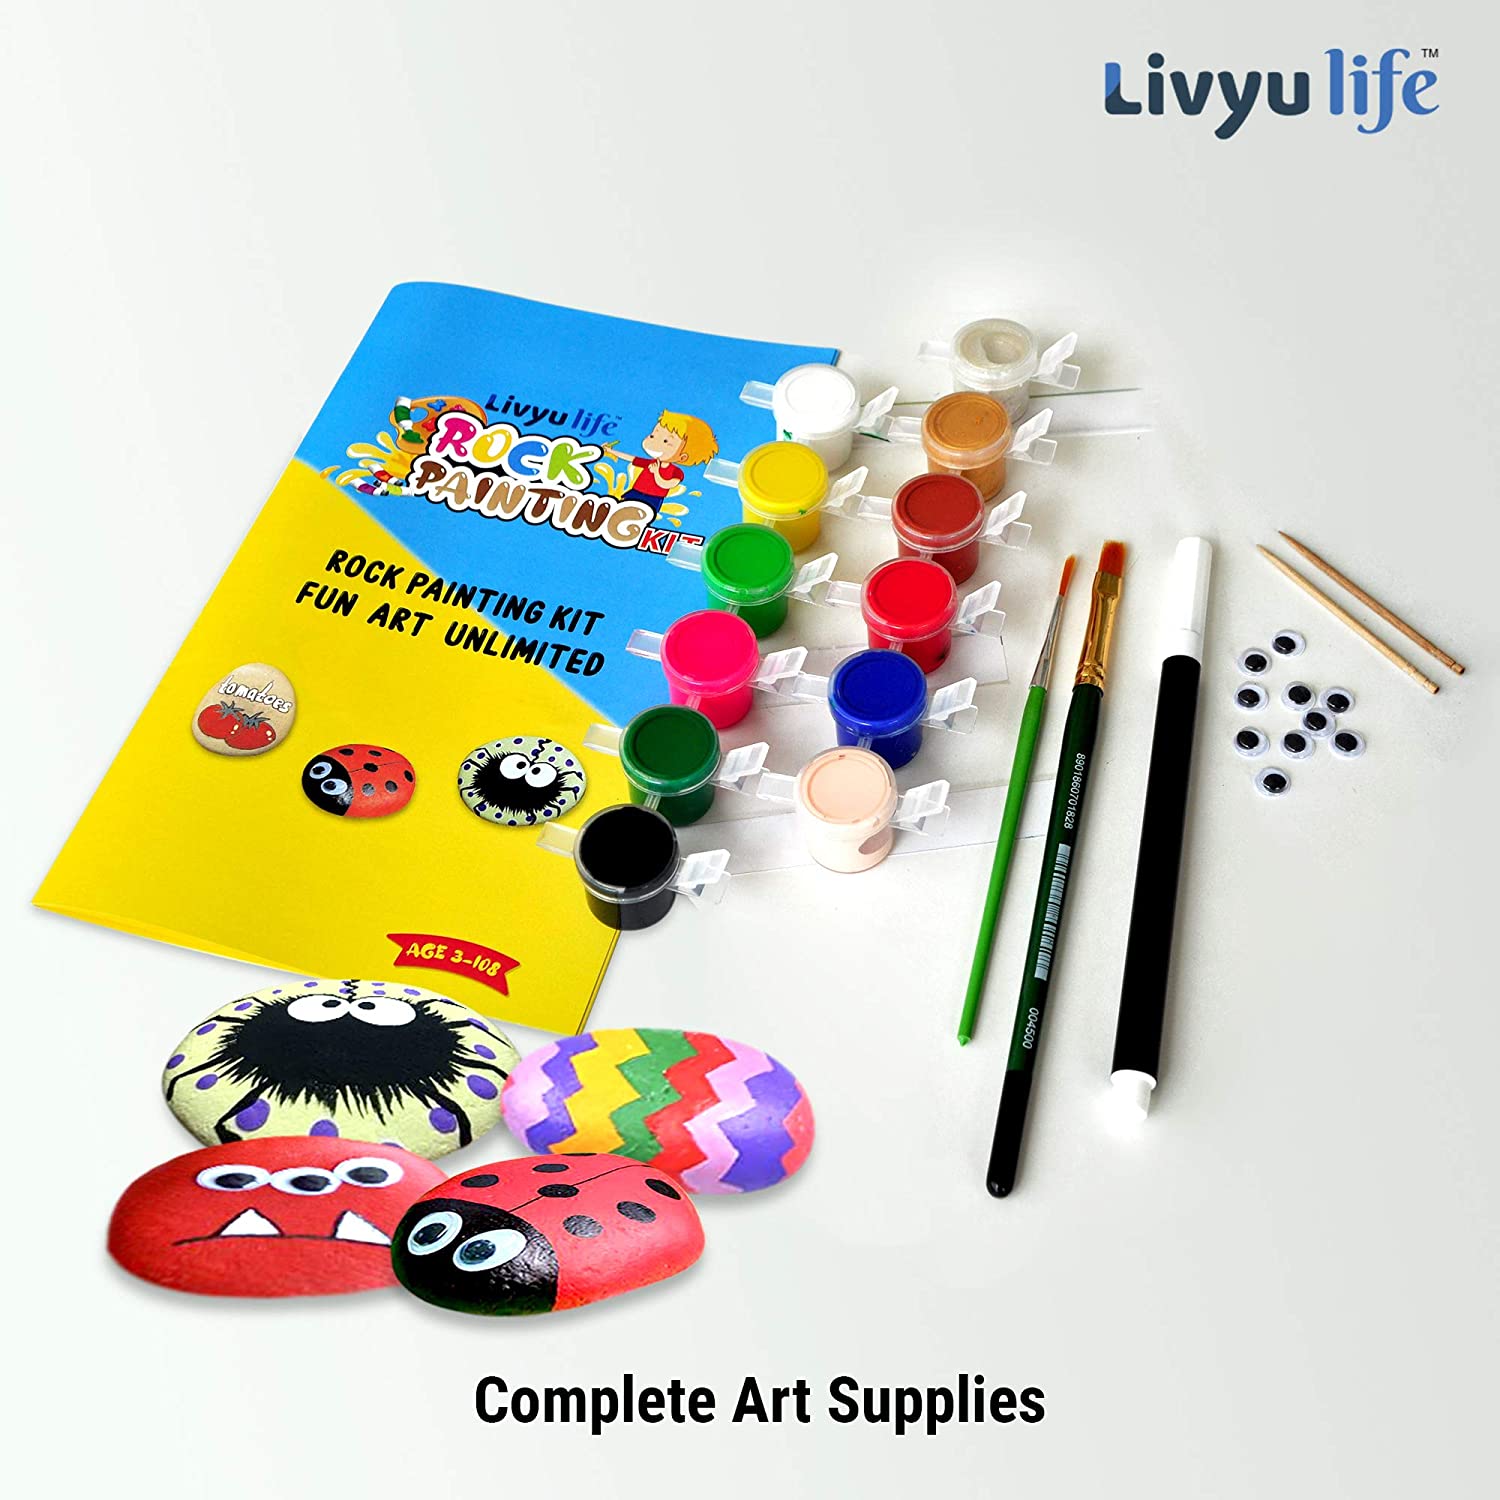 LIVYU LIFE rock painting kit, suitable birthday return gift for kids –  Livyu Life